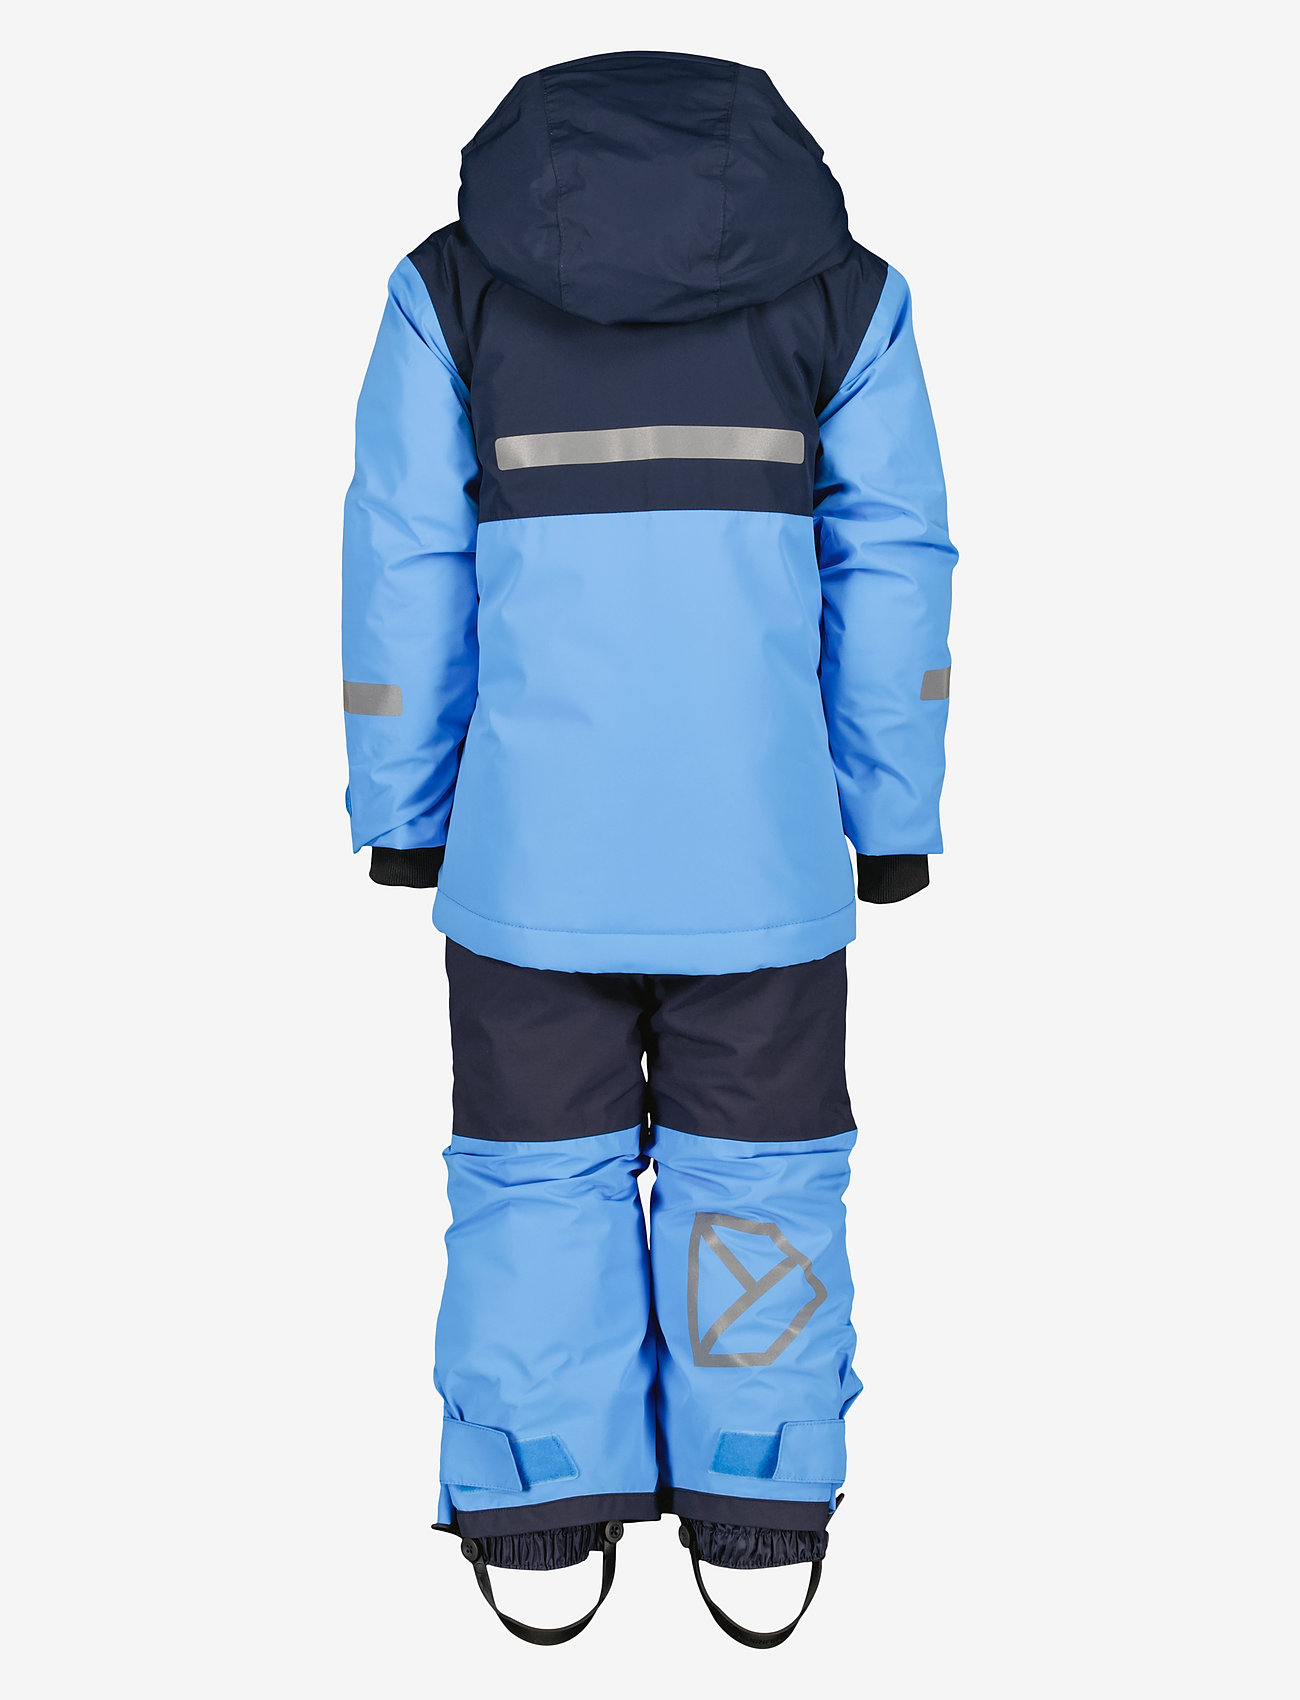 Didriksons - SKARE KIDS SET - snowsuit - play blue - 1